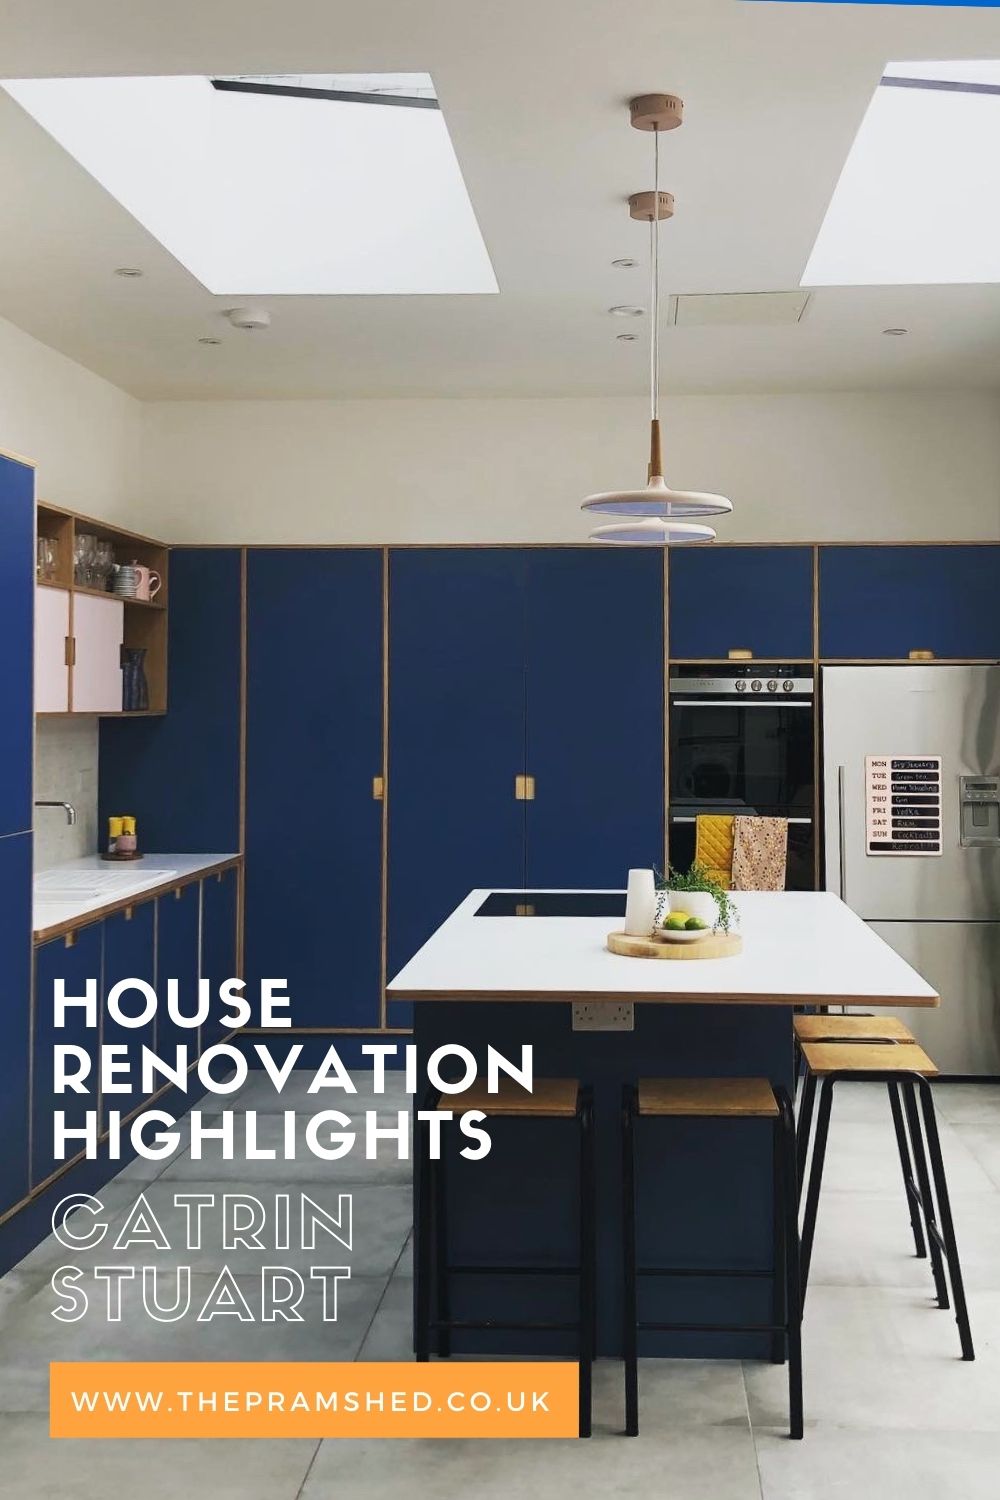 House Renovation Highlights featuring Catrin Stuart